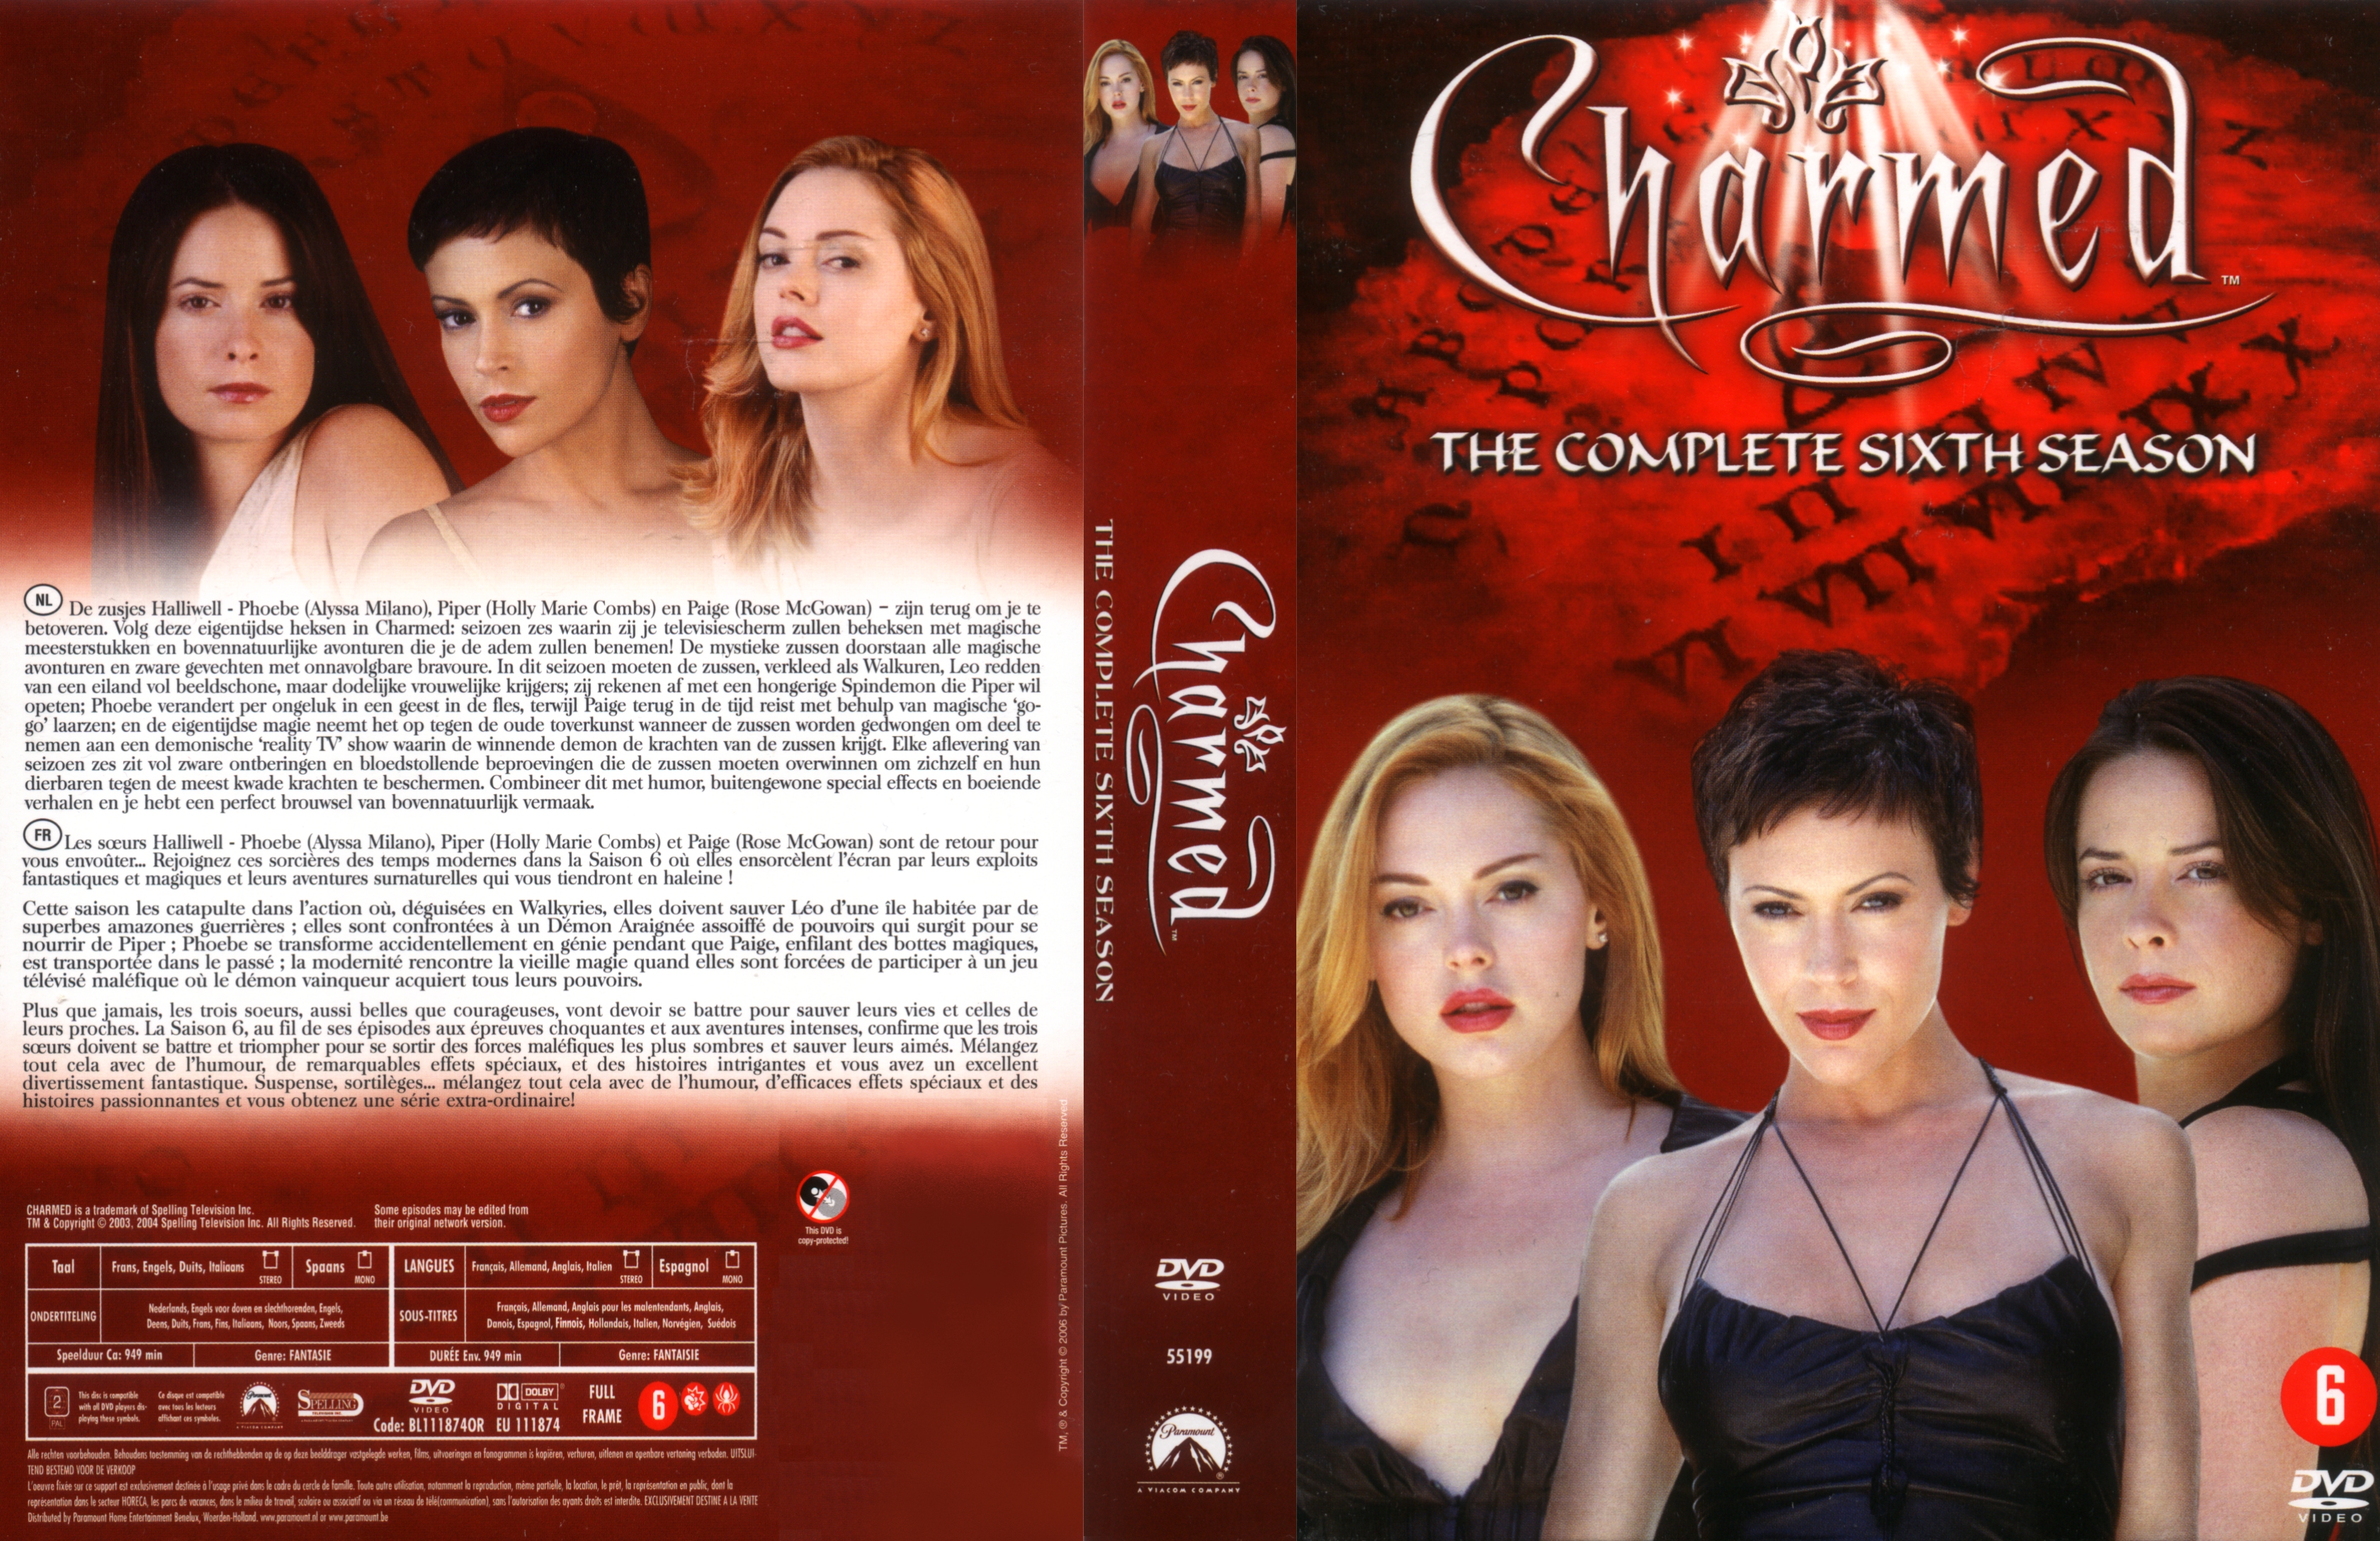 Charmed 6 DVD BOX seizoen 6